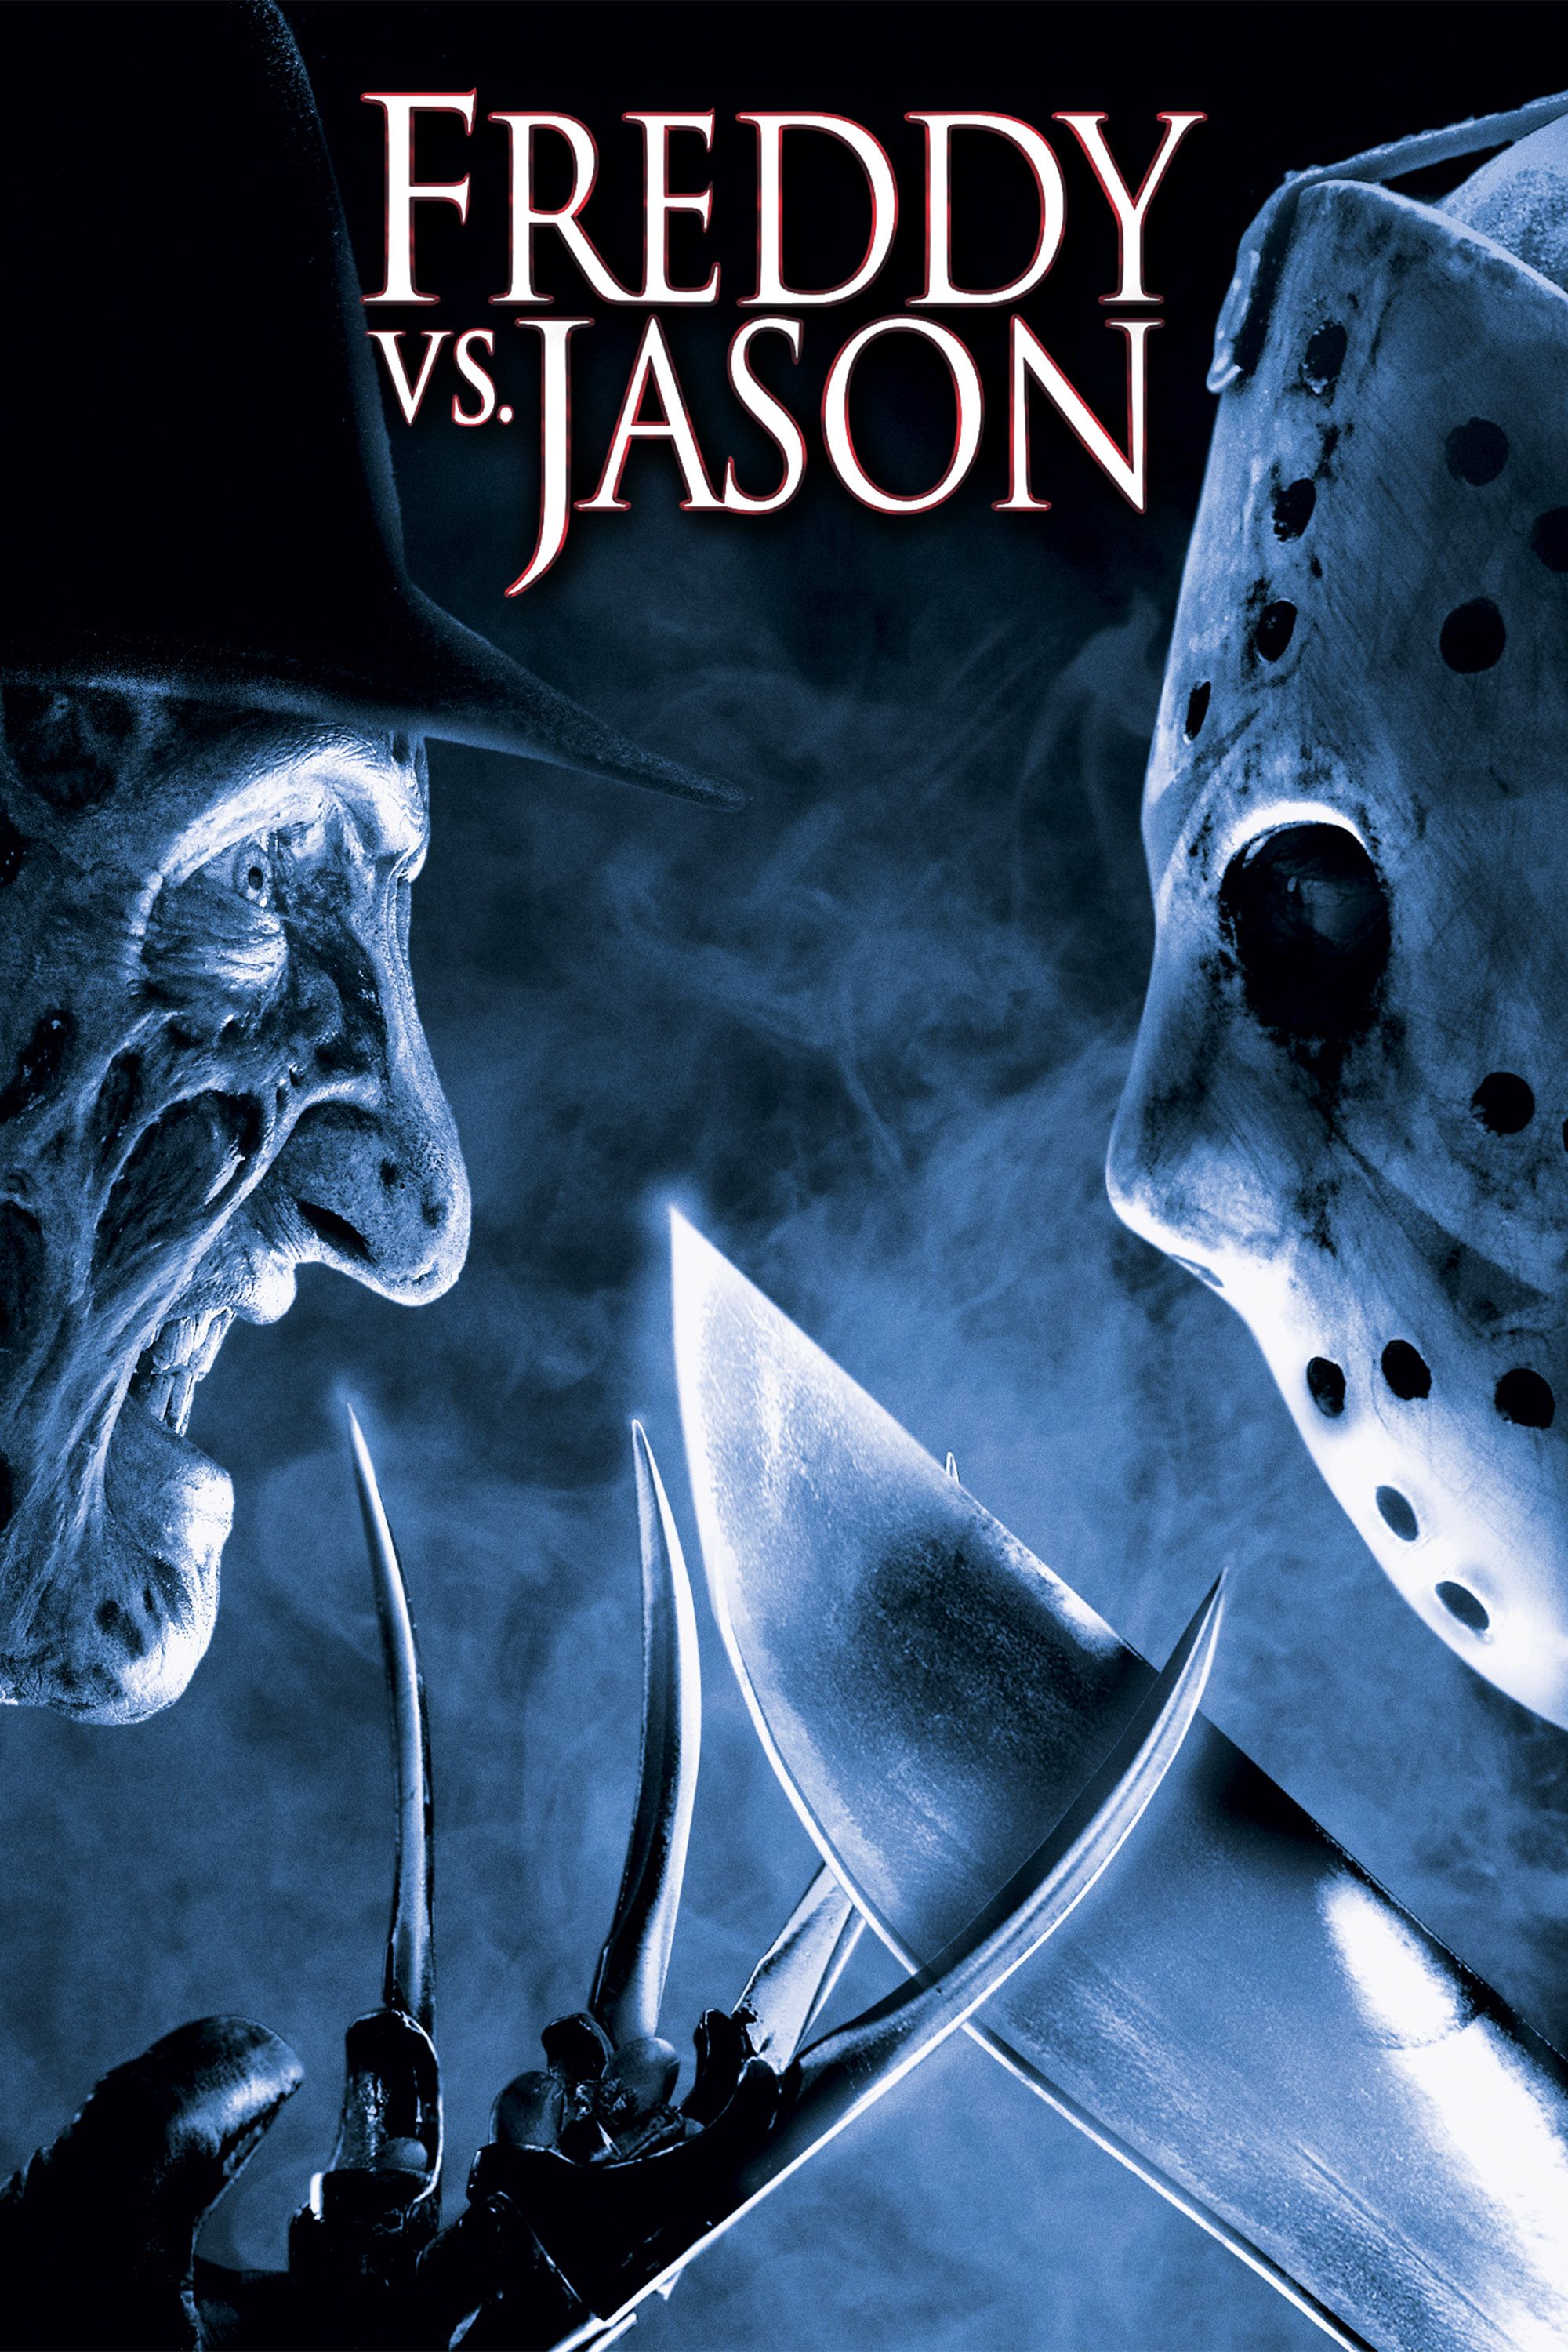 Jason vs freddy free online